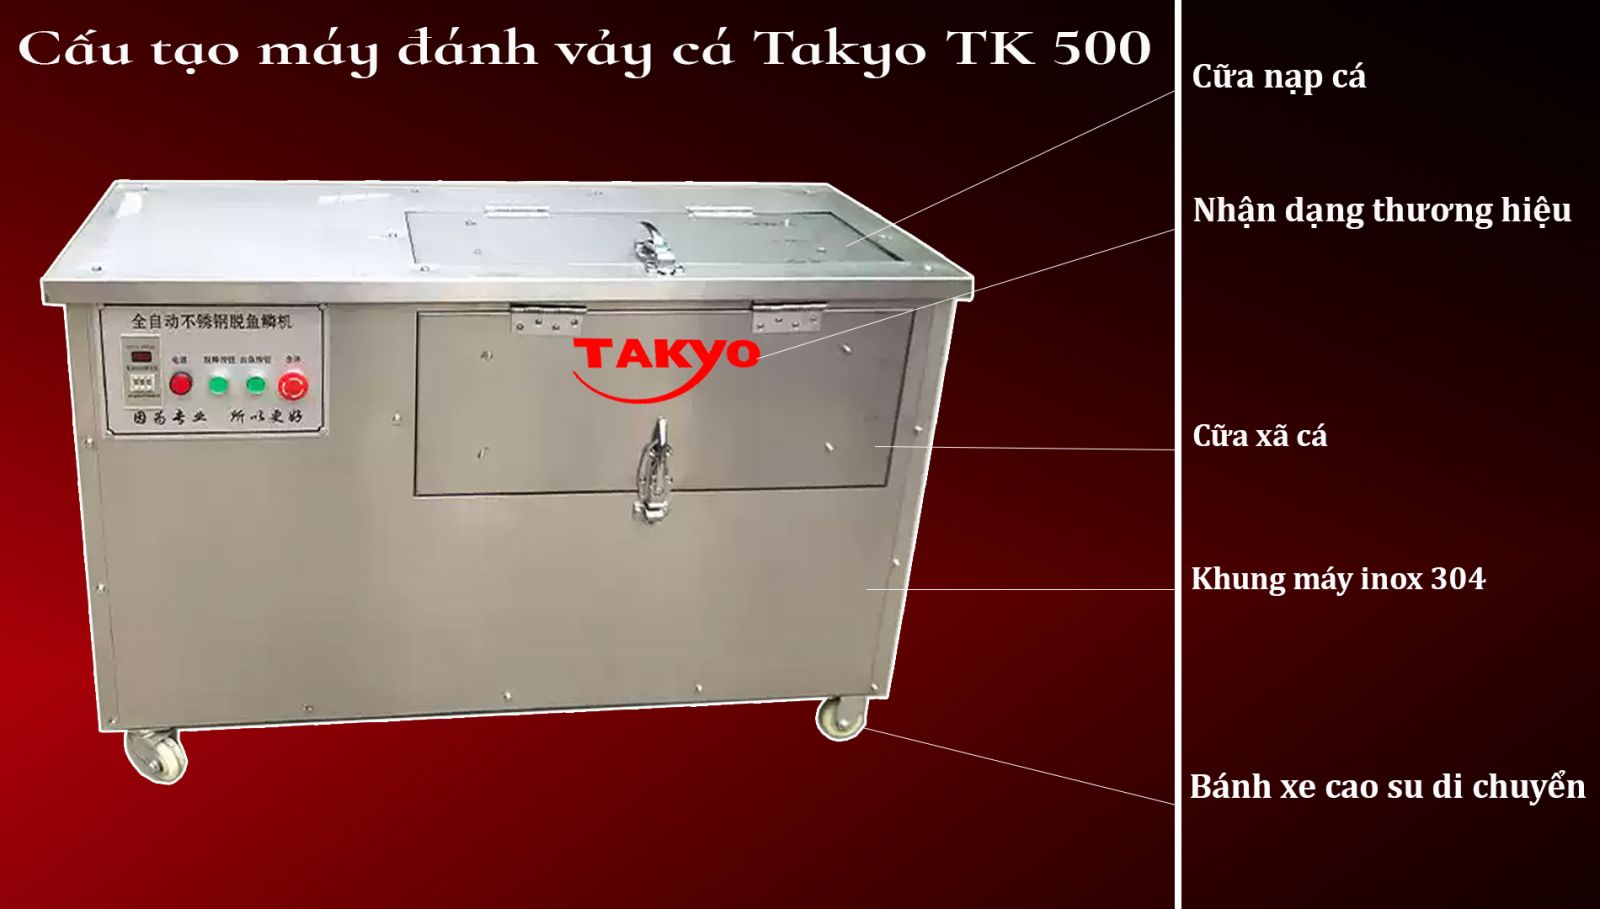 cau-tao-may-danh-vay-ca-cam-tay-takyo-tk500